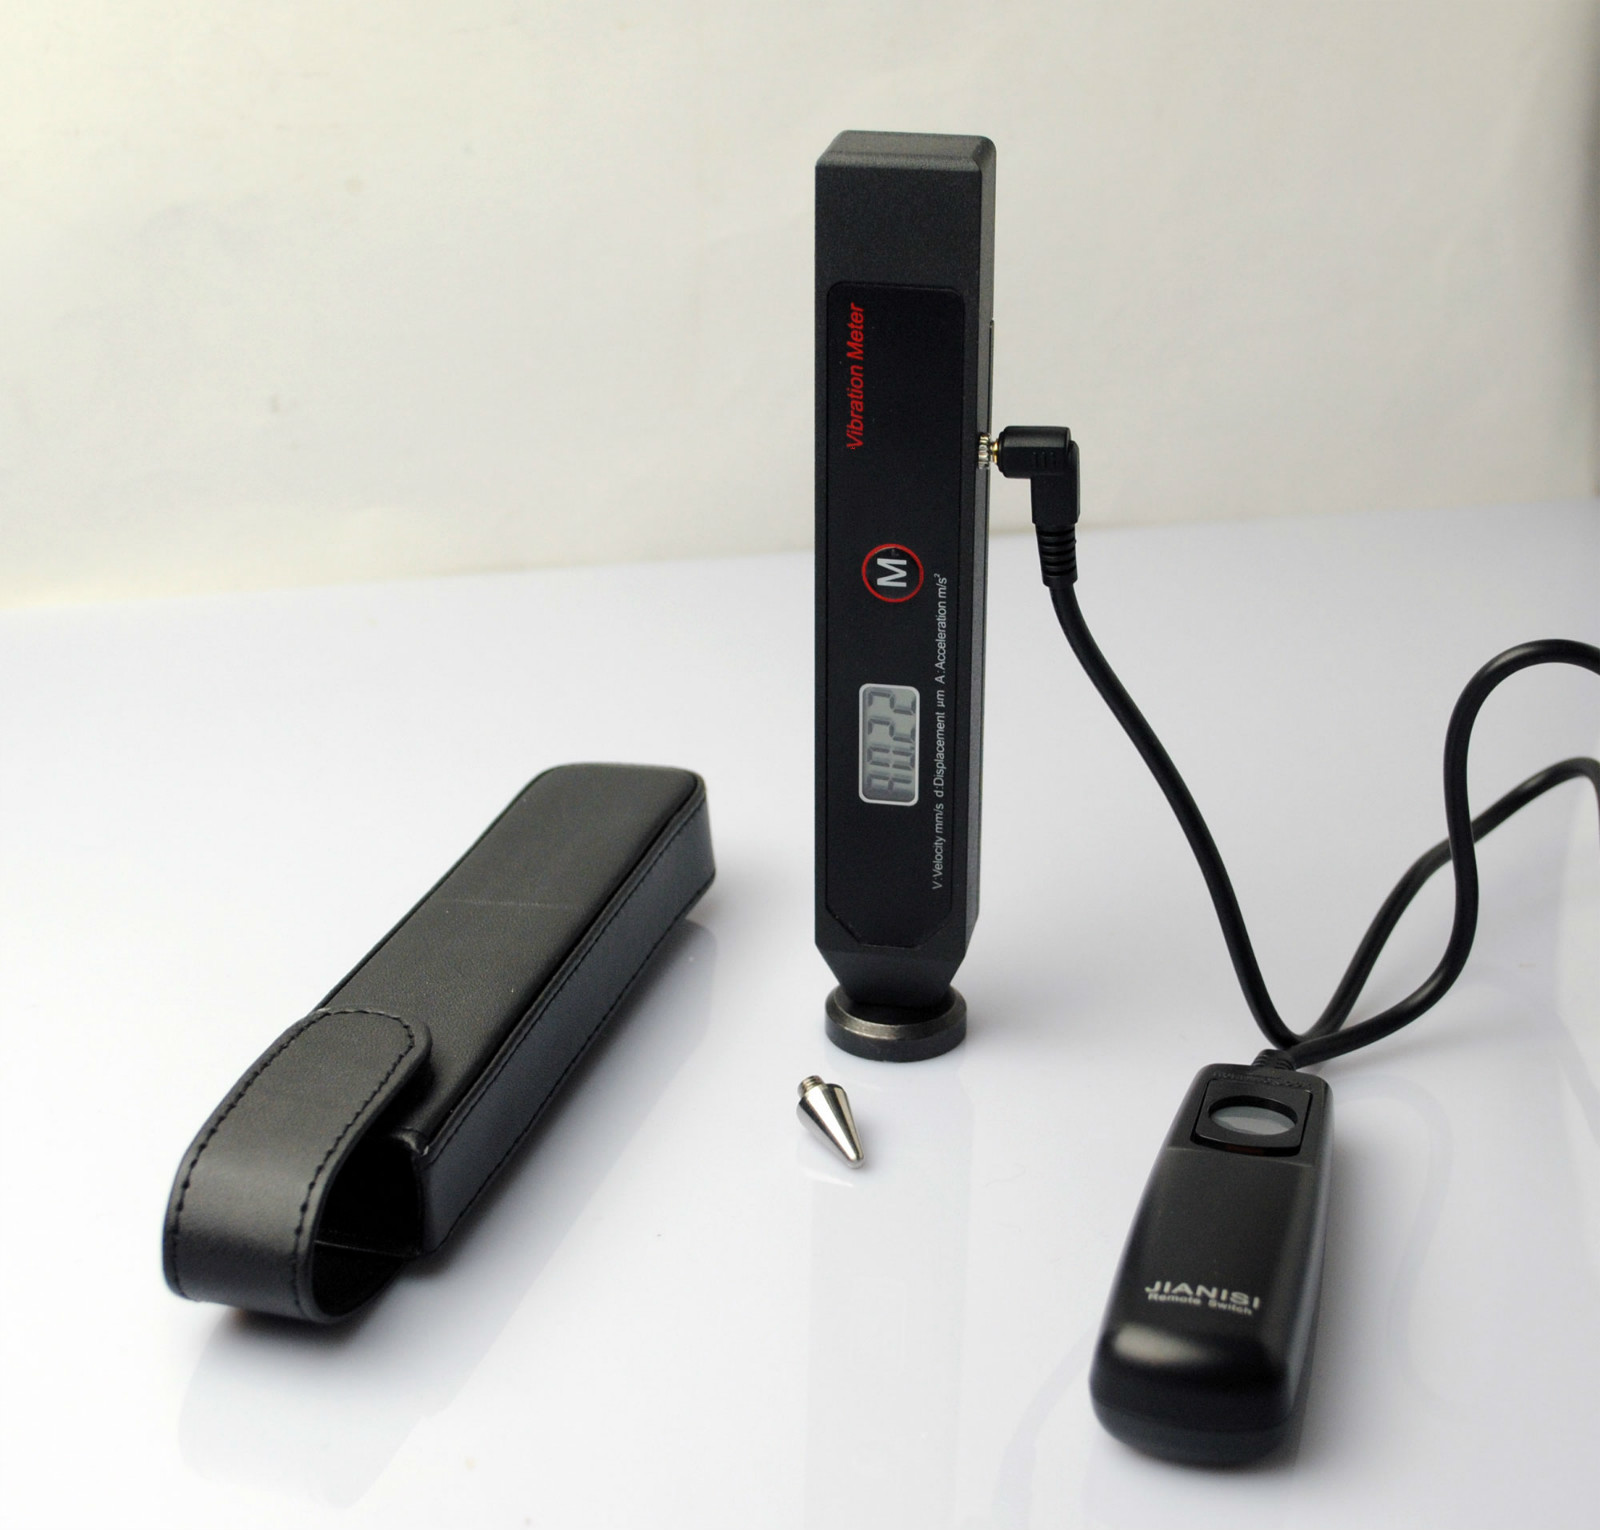 China Portable Vibration Analyzer, Portable vibration tester,vibration measurement equipment VM7001D wholesale